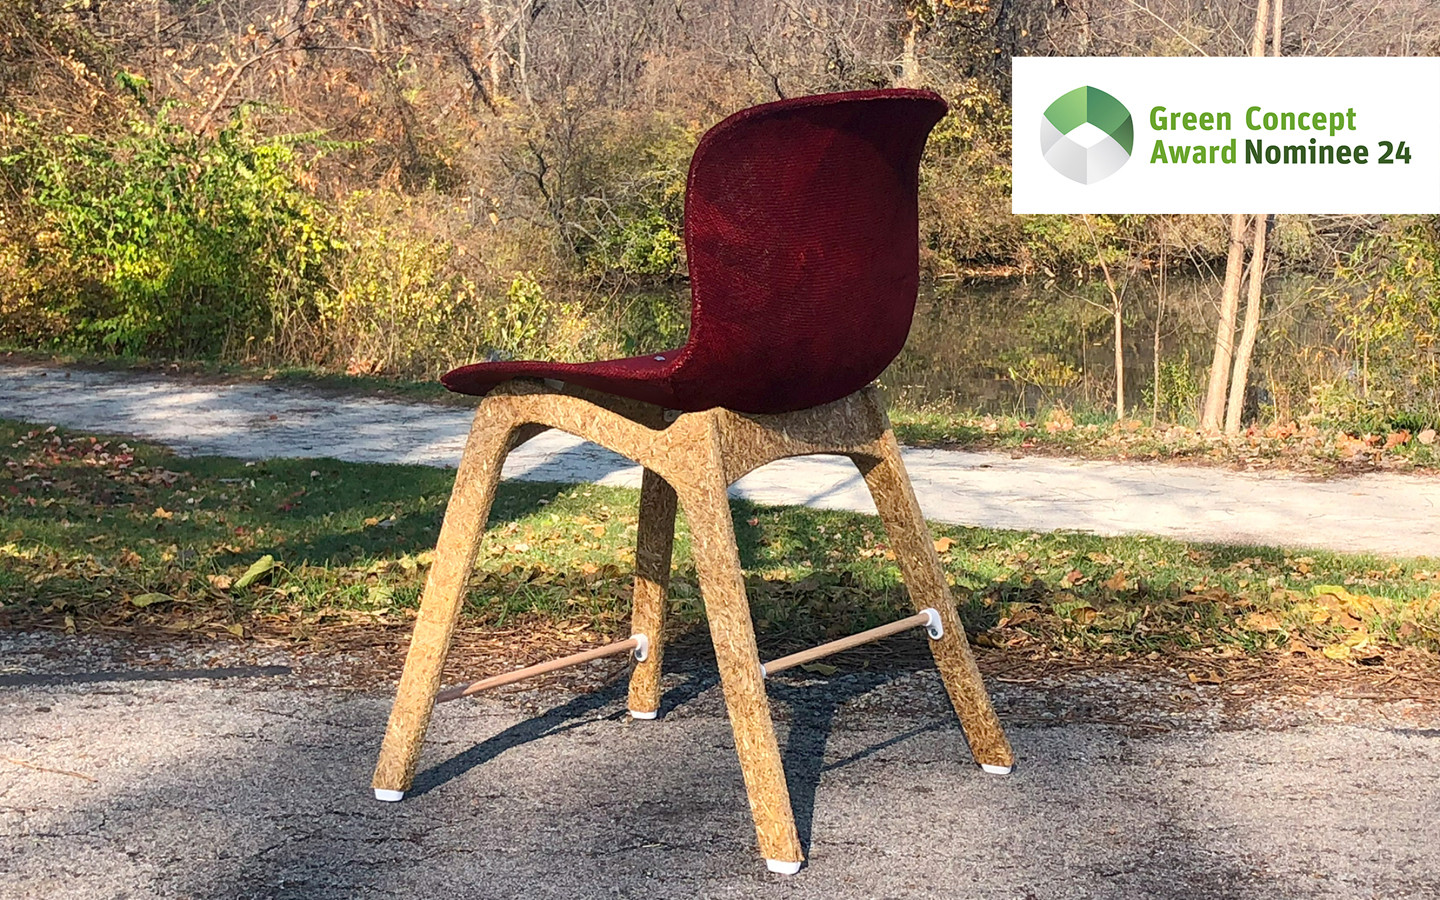 The Fiber Chair